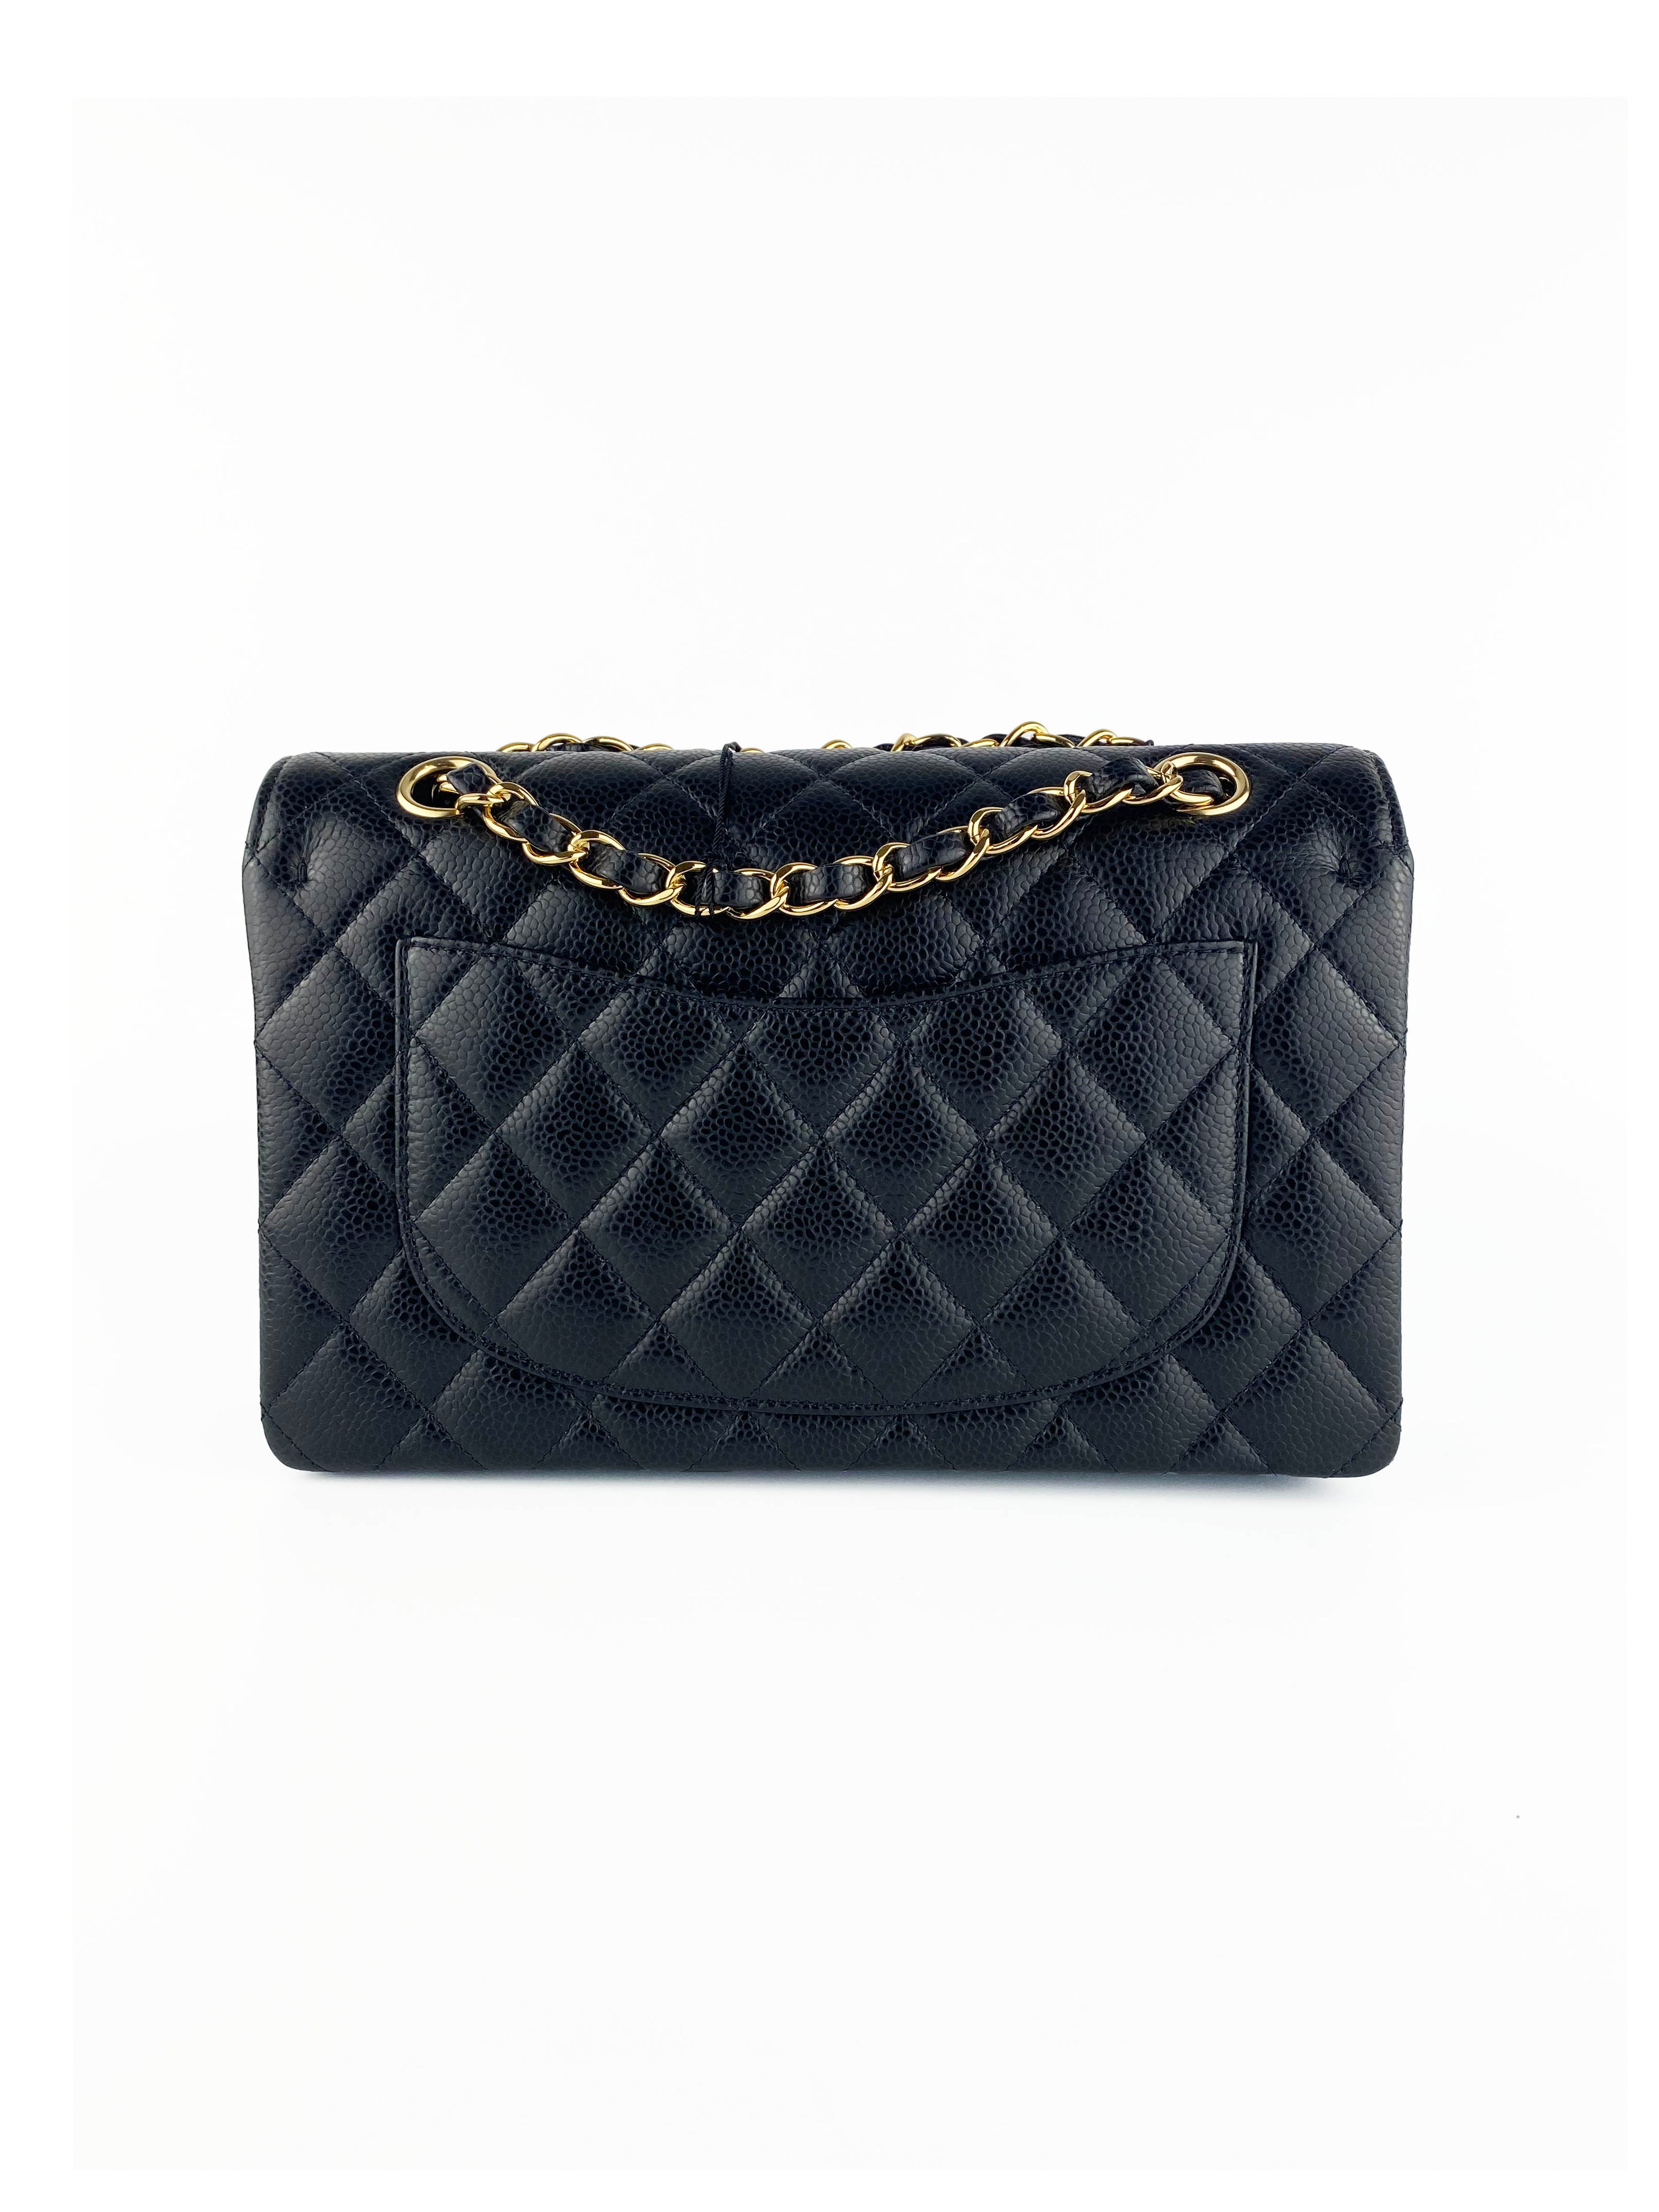 Chanel Black Small Classic Flap Bag